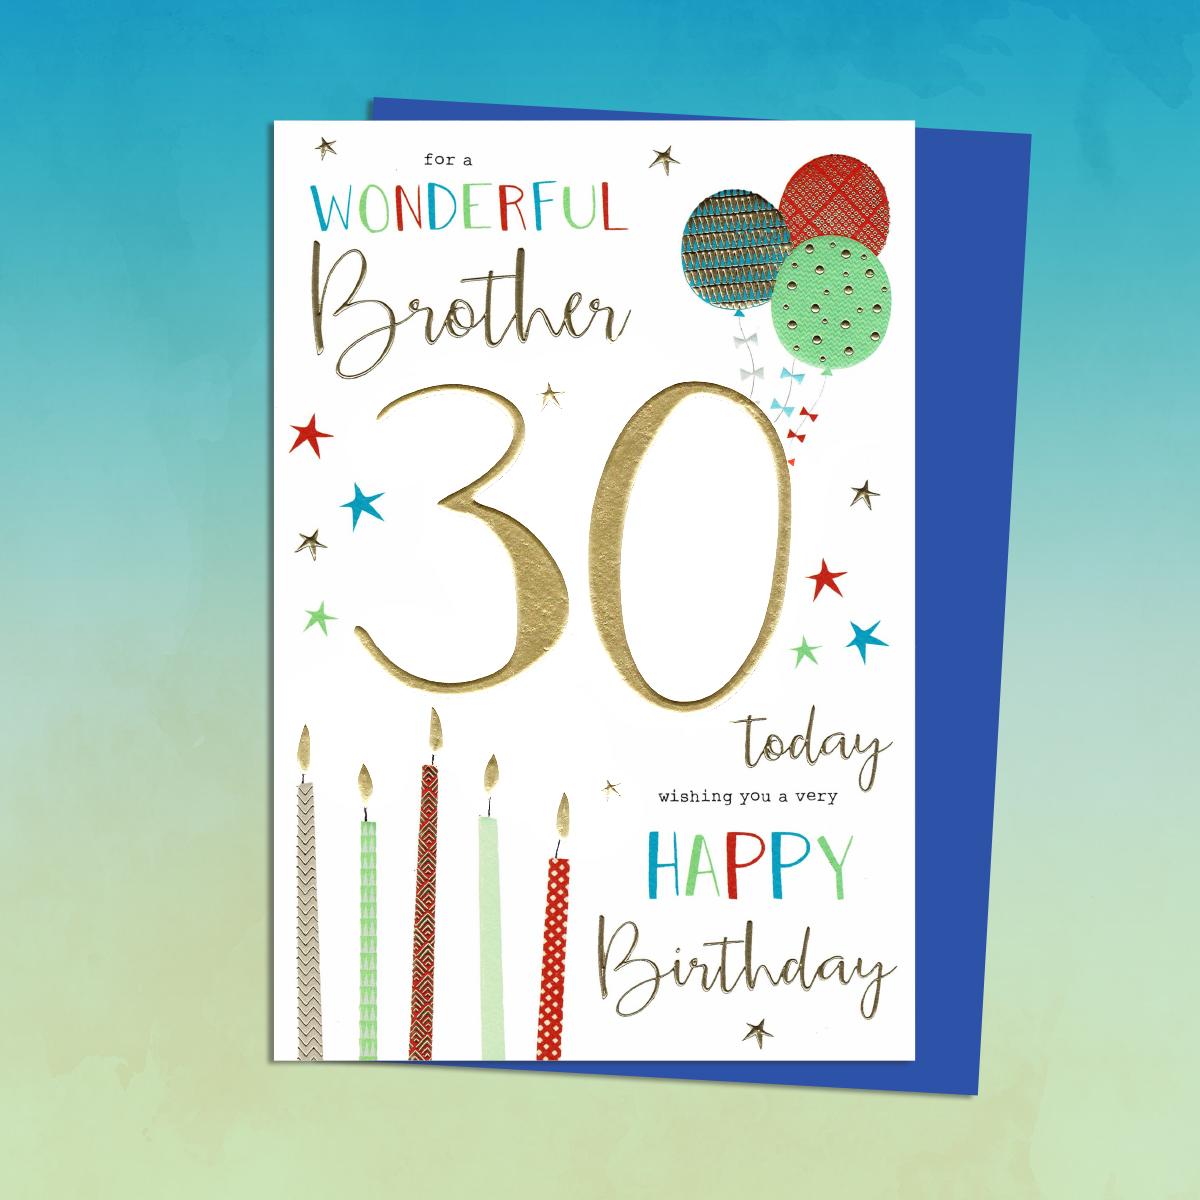 Wonderful Brother 30 Birthday Card Alongside Its Blue Envelope